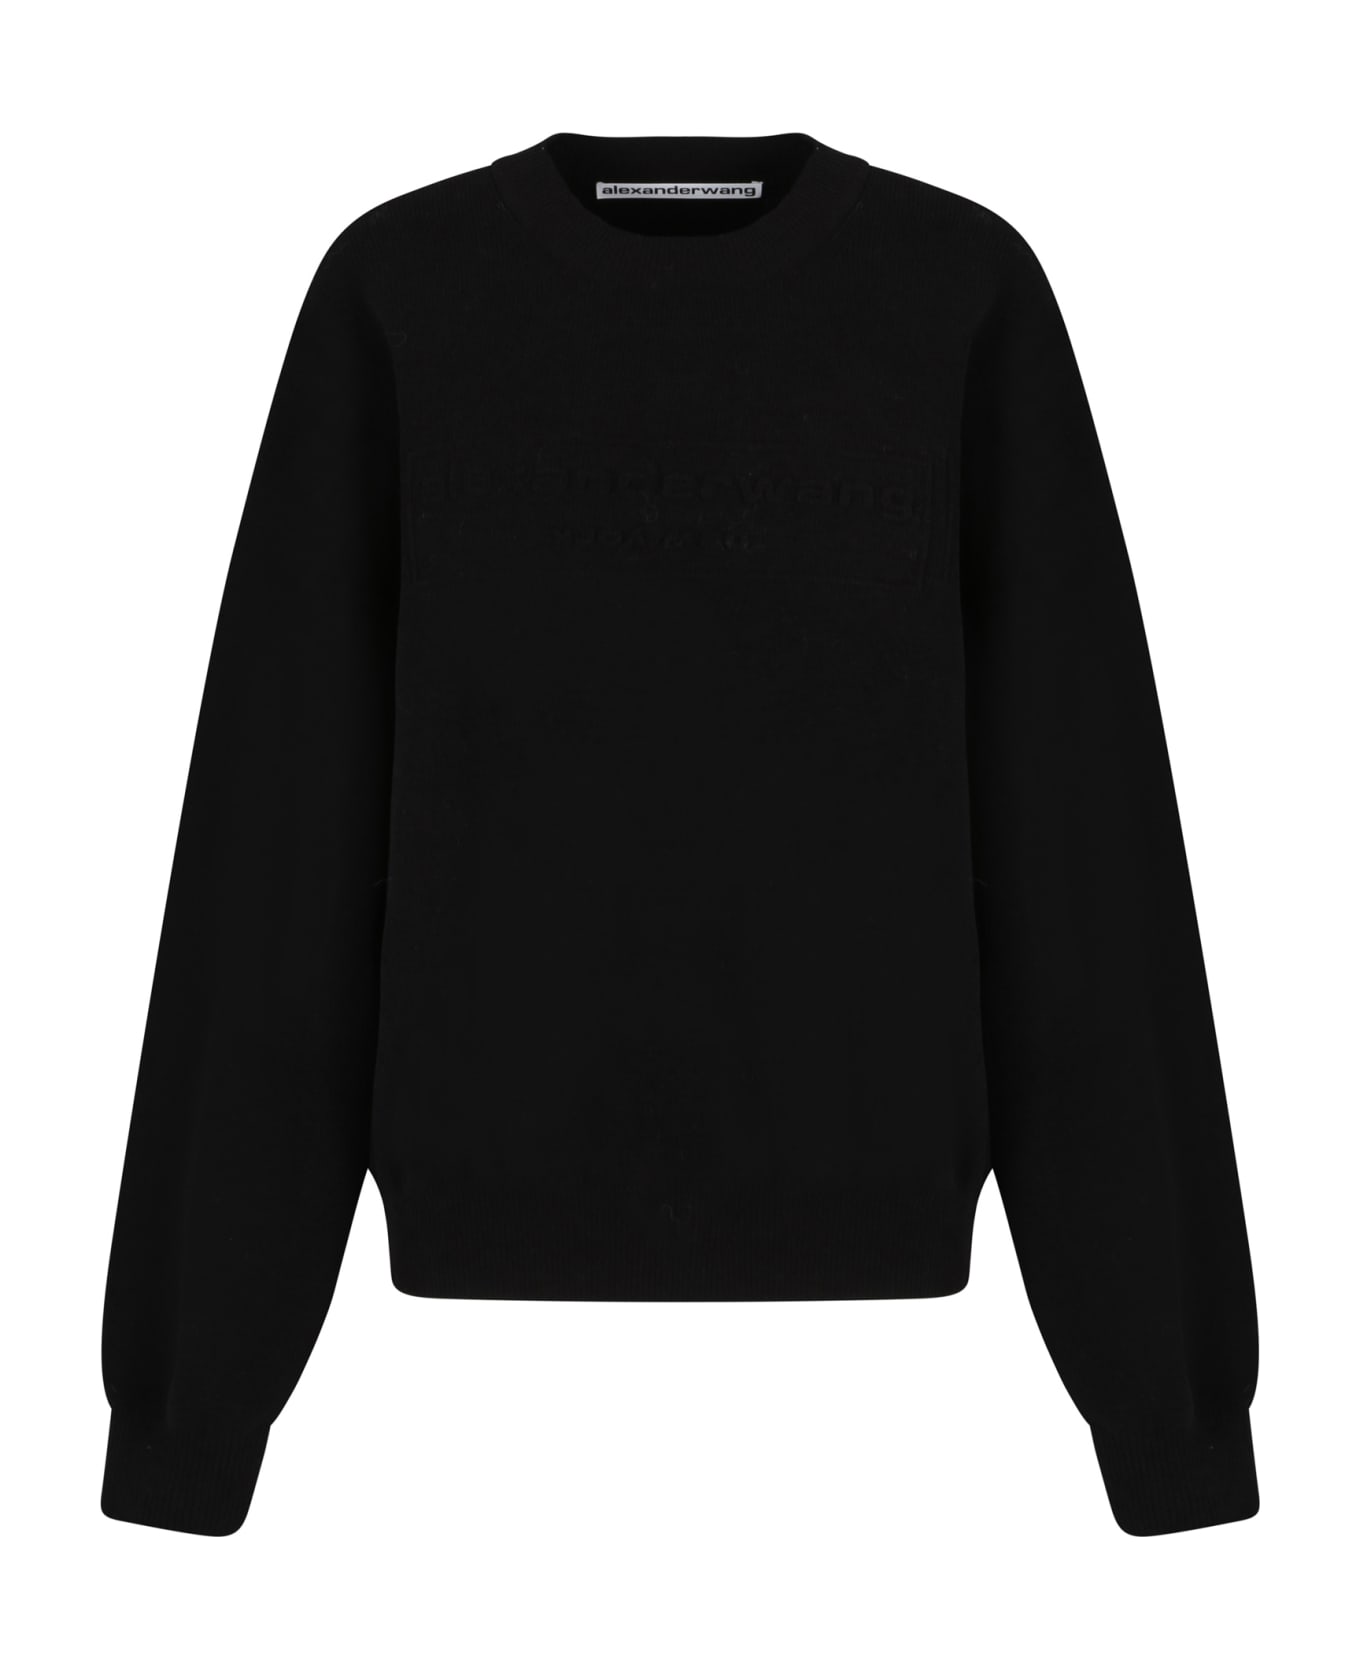 Alexander Wang Sweater - Black